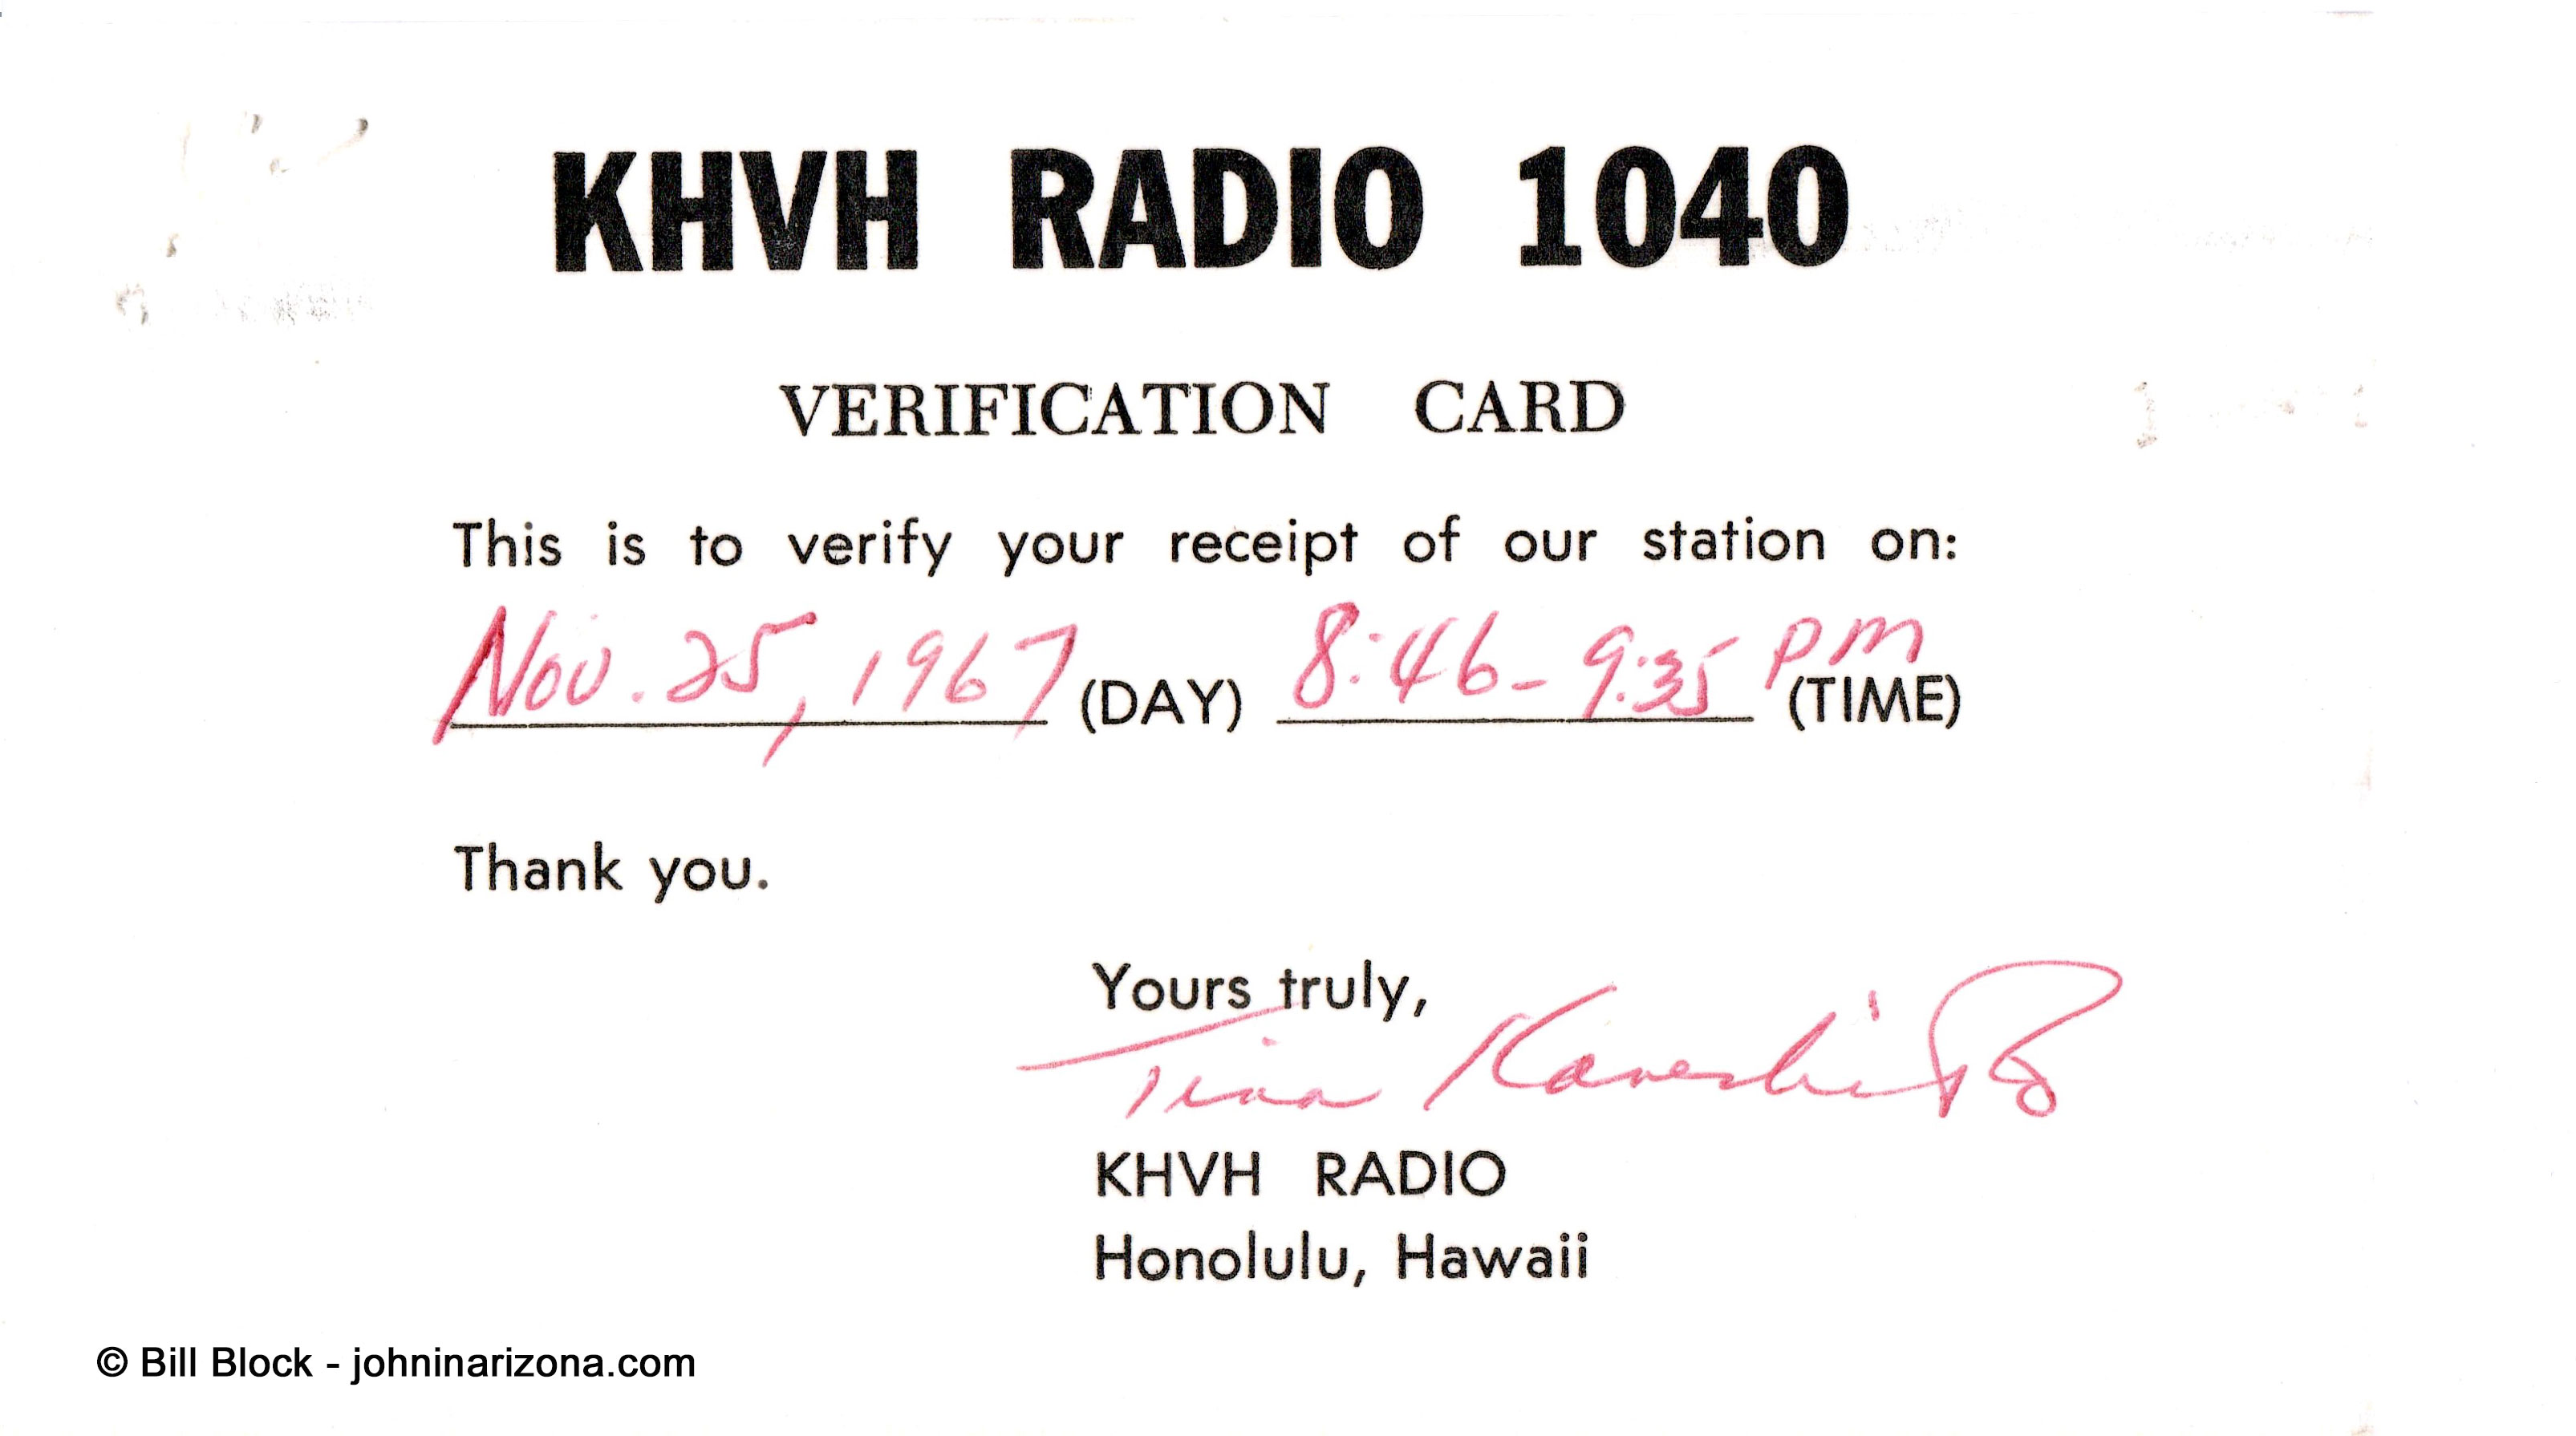 KHVH Radio 1040 Honolulu, Hawaii